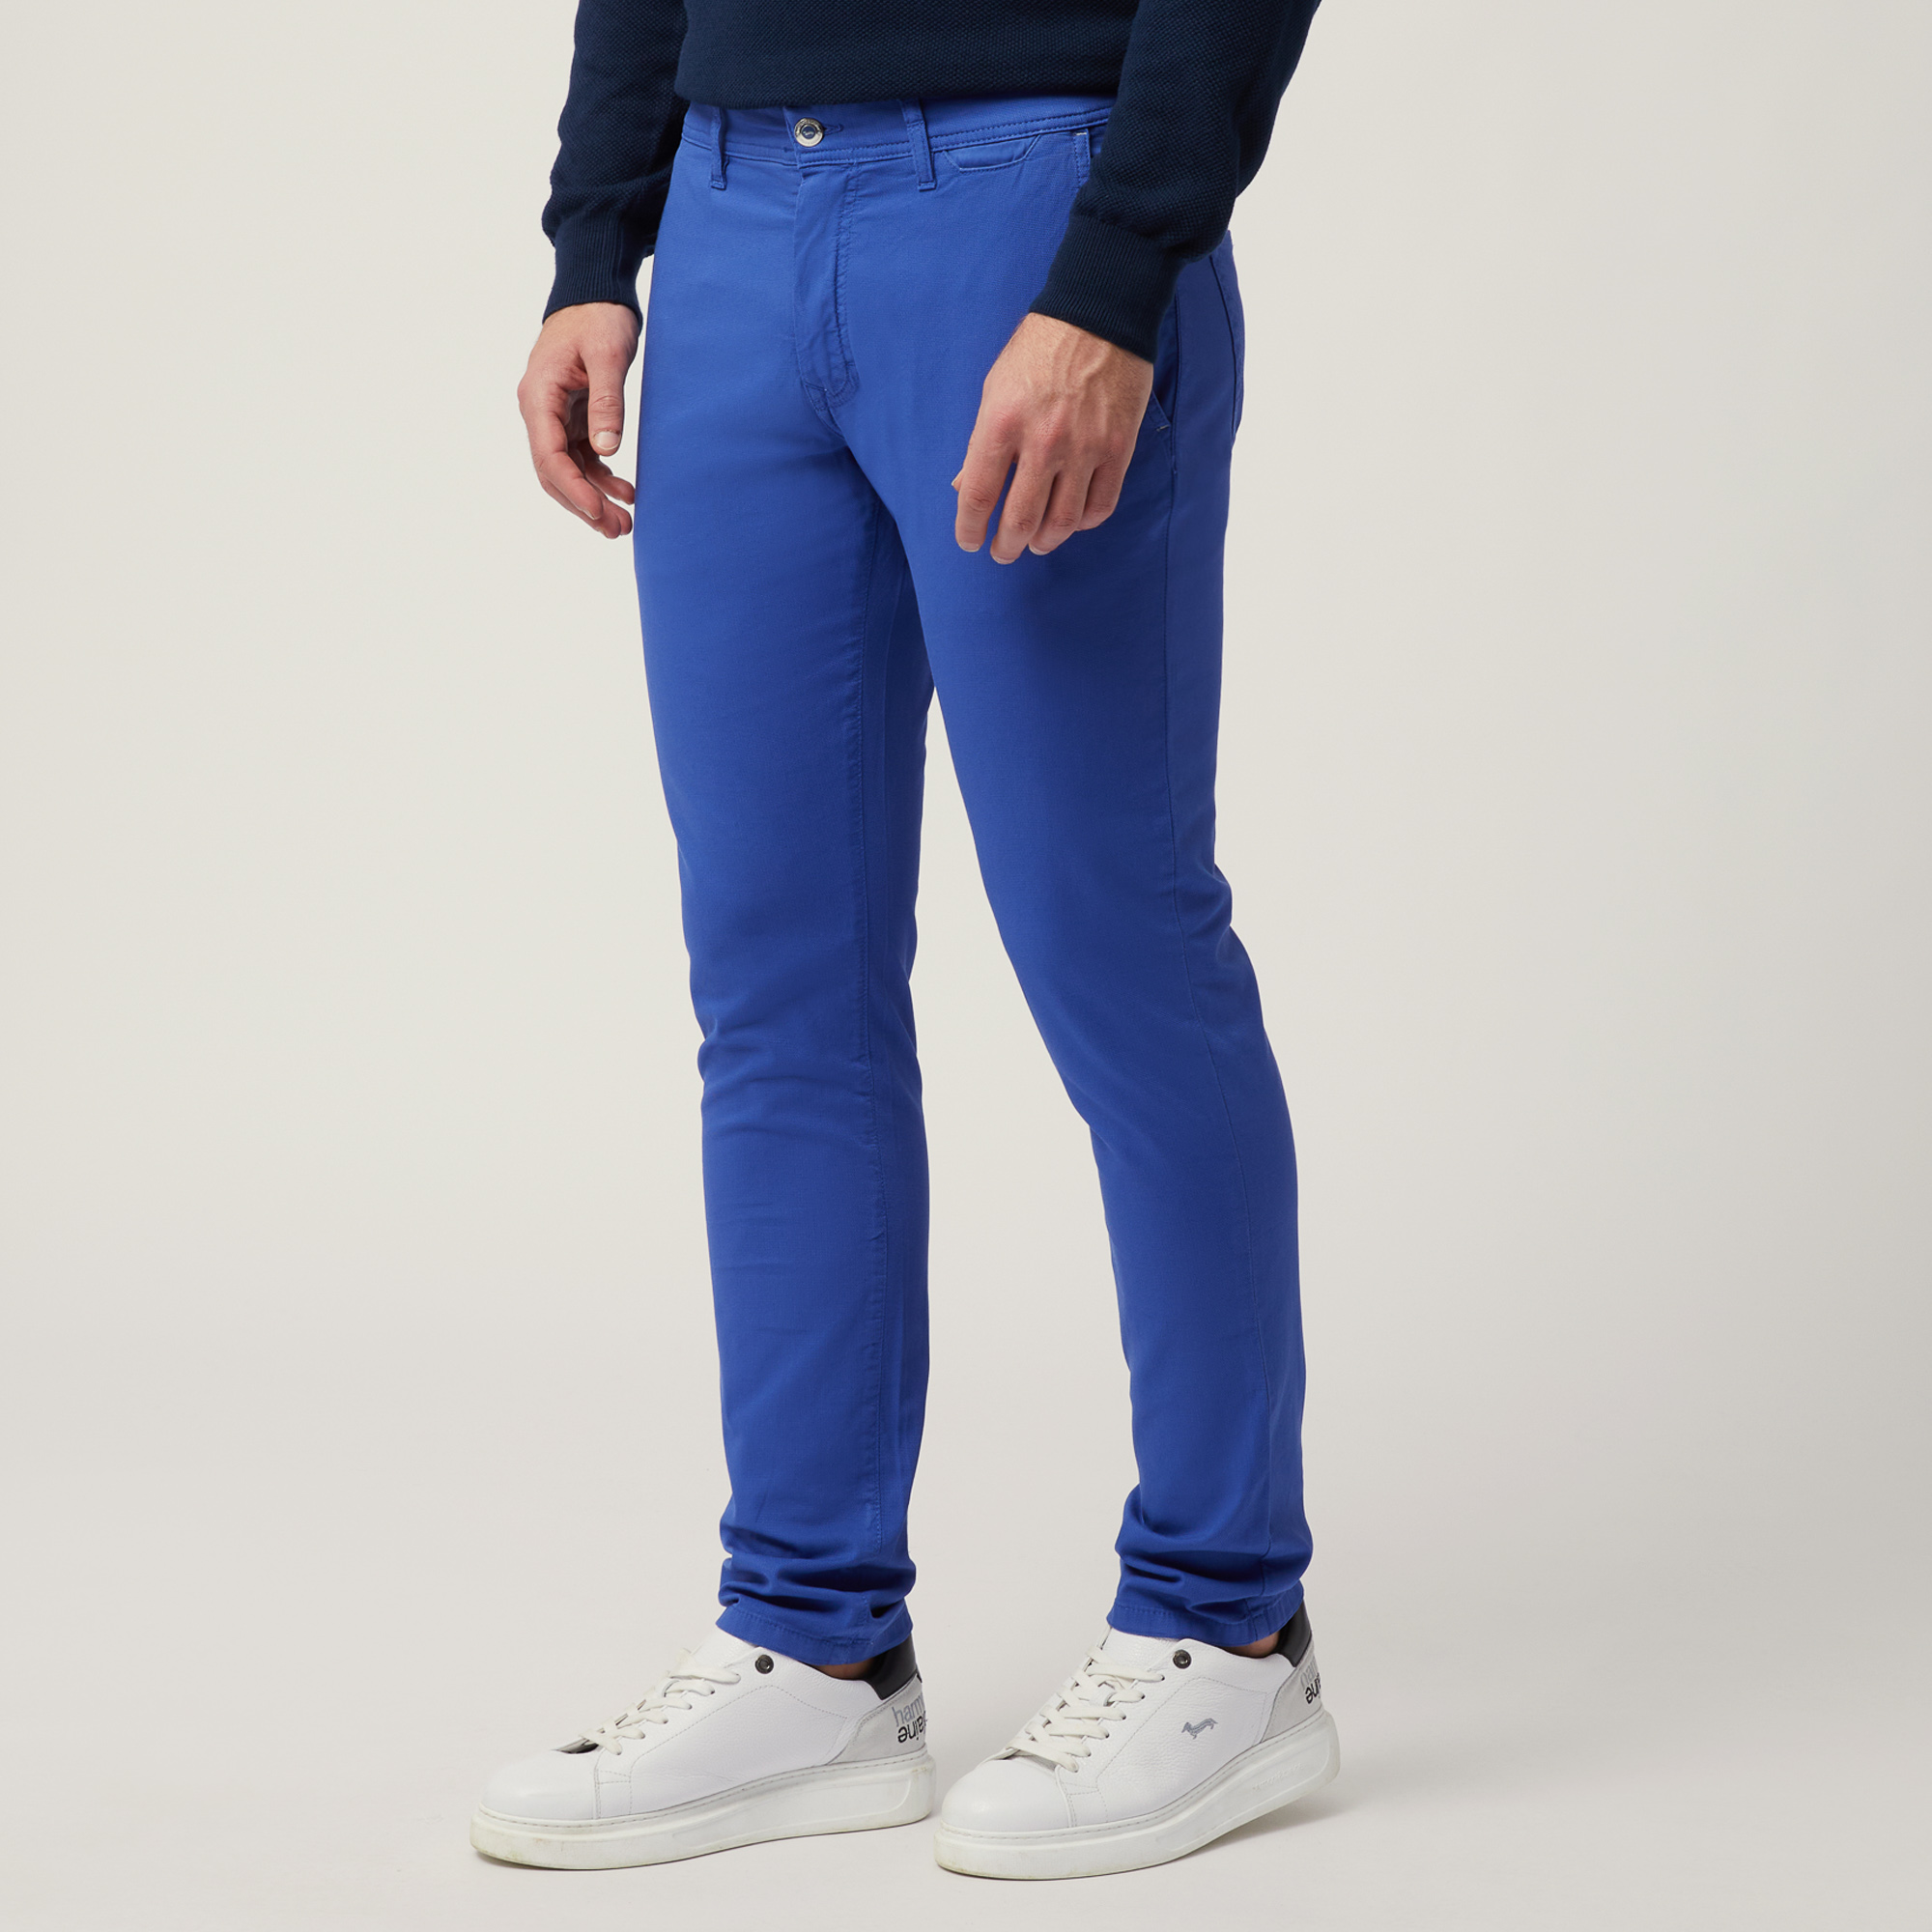 Pantaloni Colorfive, Ortensia, large image number 0